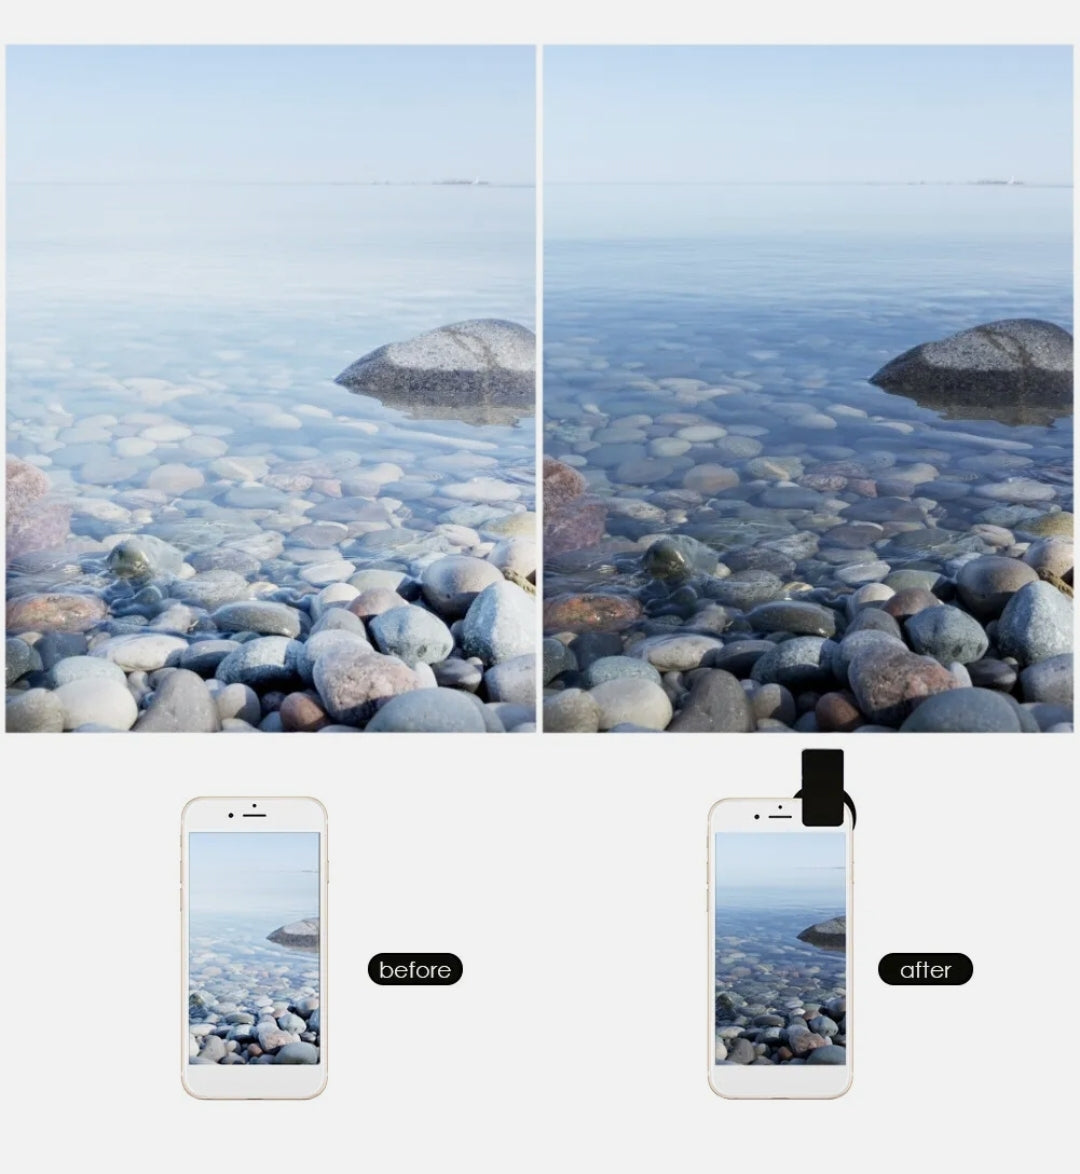 37mm Clip-on Phone Camera Lens Filter Adjustable Neutral Density Filter